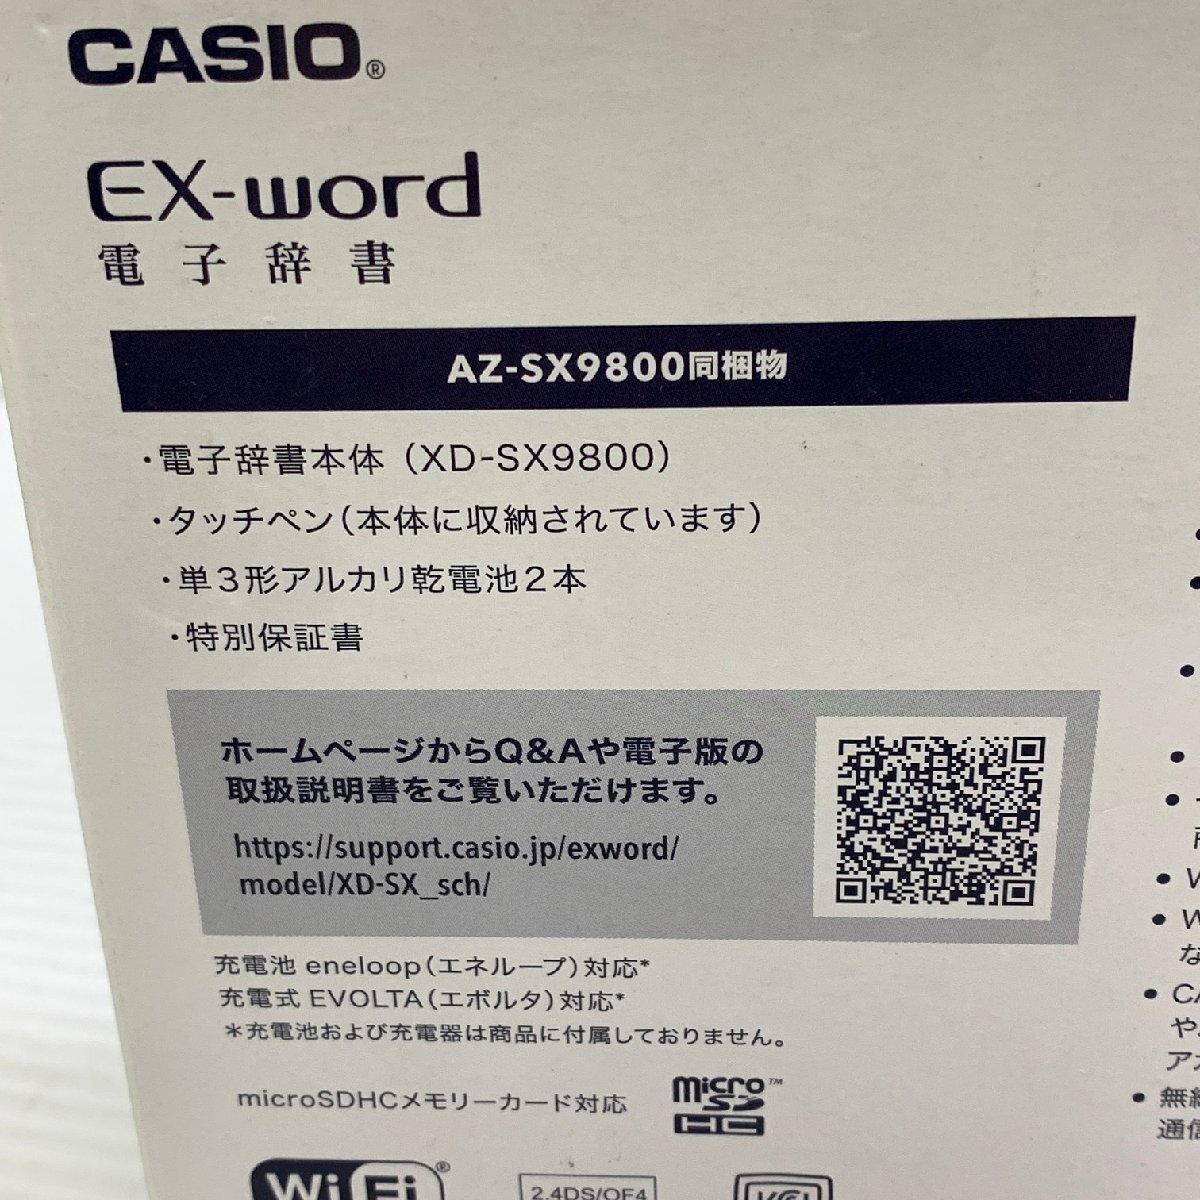 MIN【中古美品】 MSMK CASIO AZ-SX9800 EX-word 電子辞書 学校パック 〈96-240425-KS-7-MIN〉の画像3